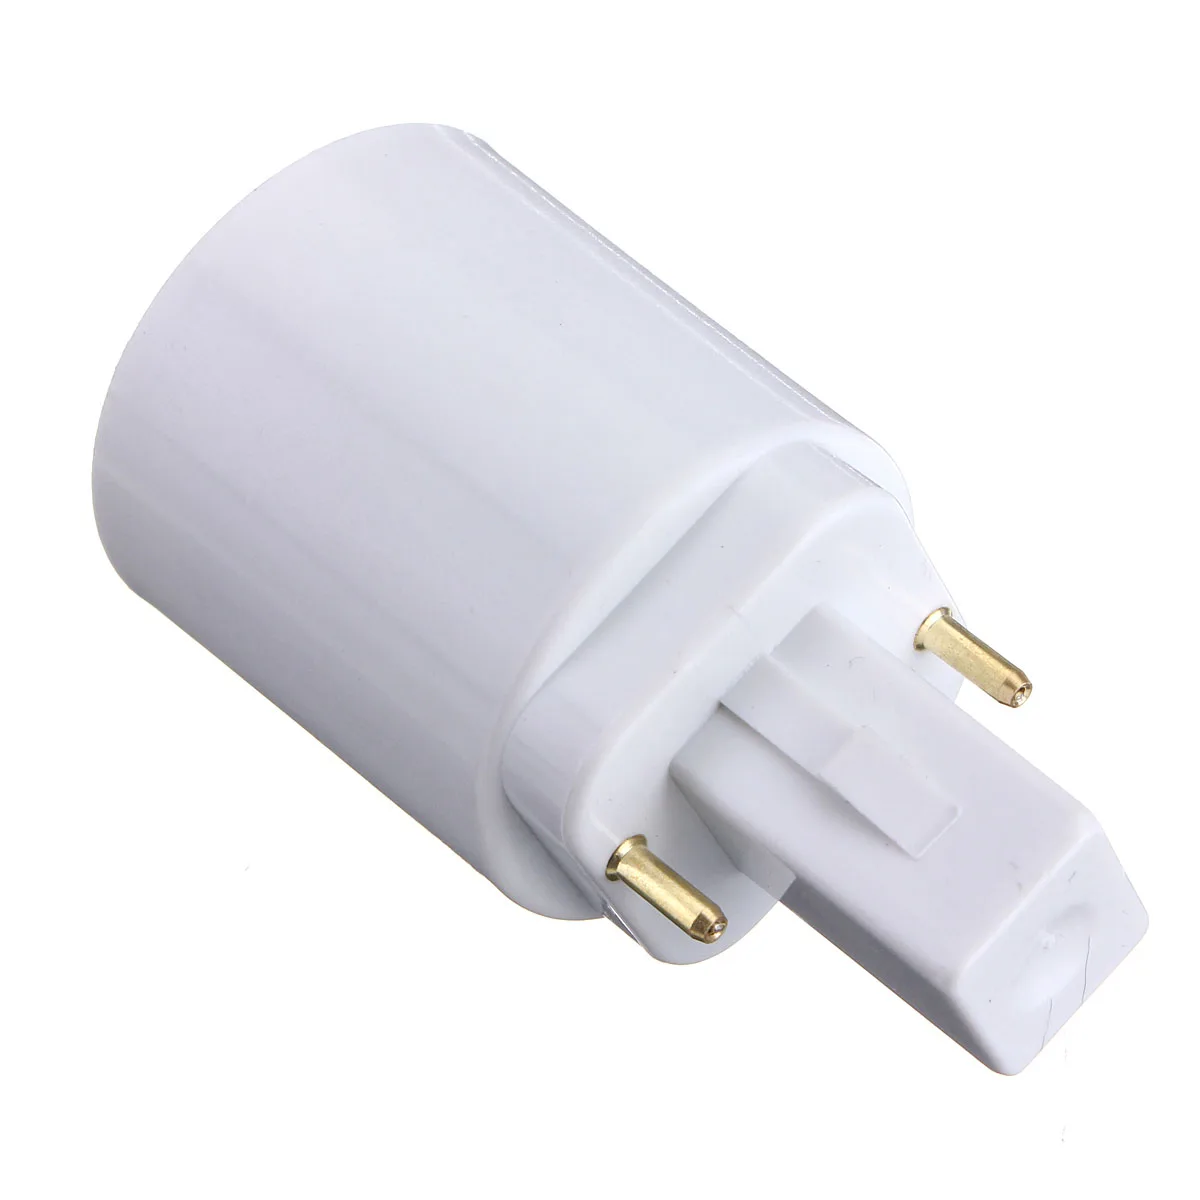 Jiguoor Белый ABS led G24 к E27 Цоколь галогенная лампа CFL светильник адаптер конвертер лампа держатель адаптер